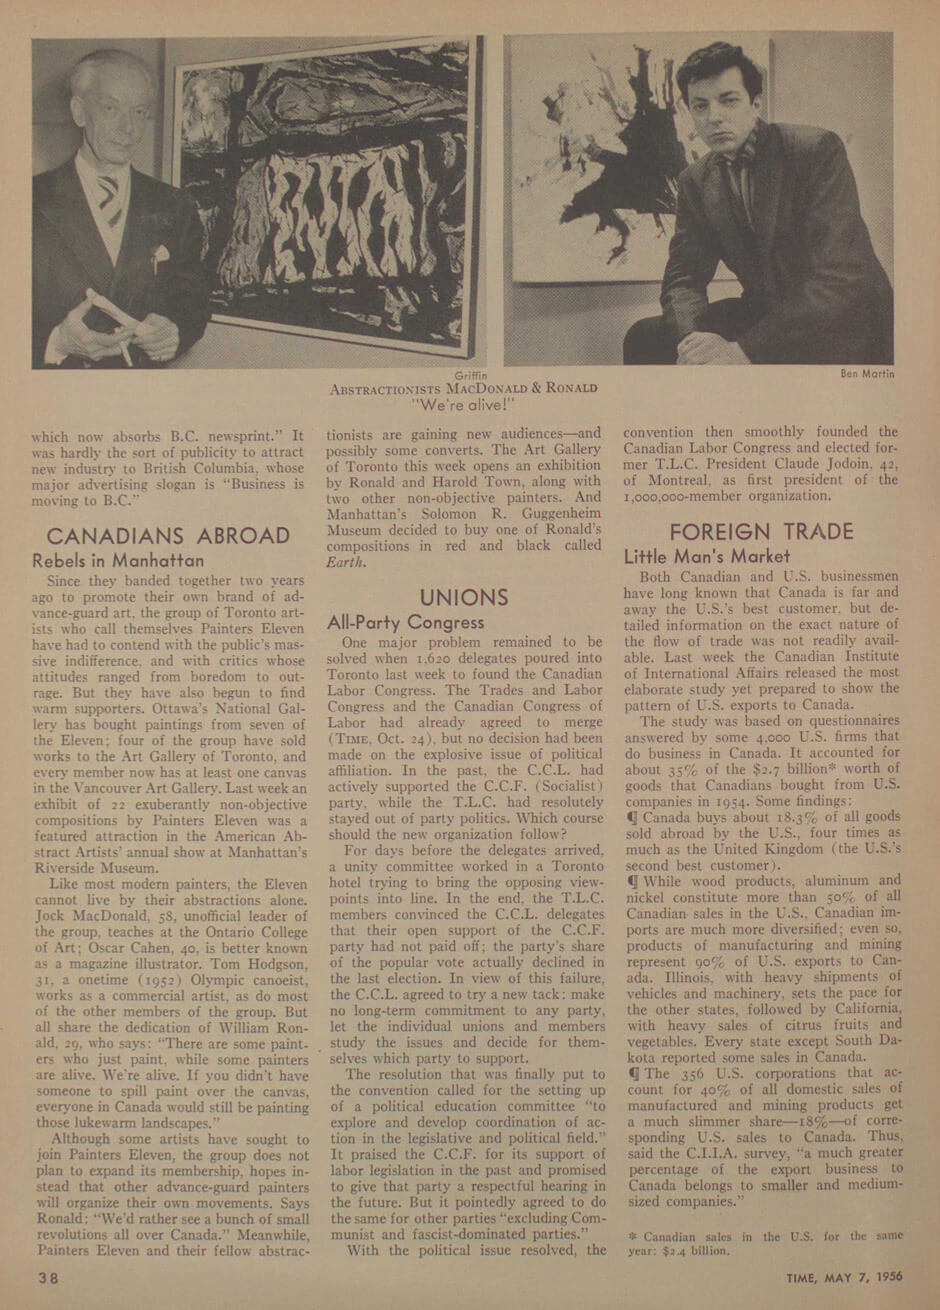 « Canadians Abroad », magazine Time, 7 mai 1956.